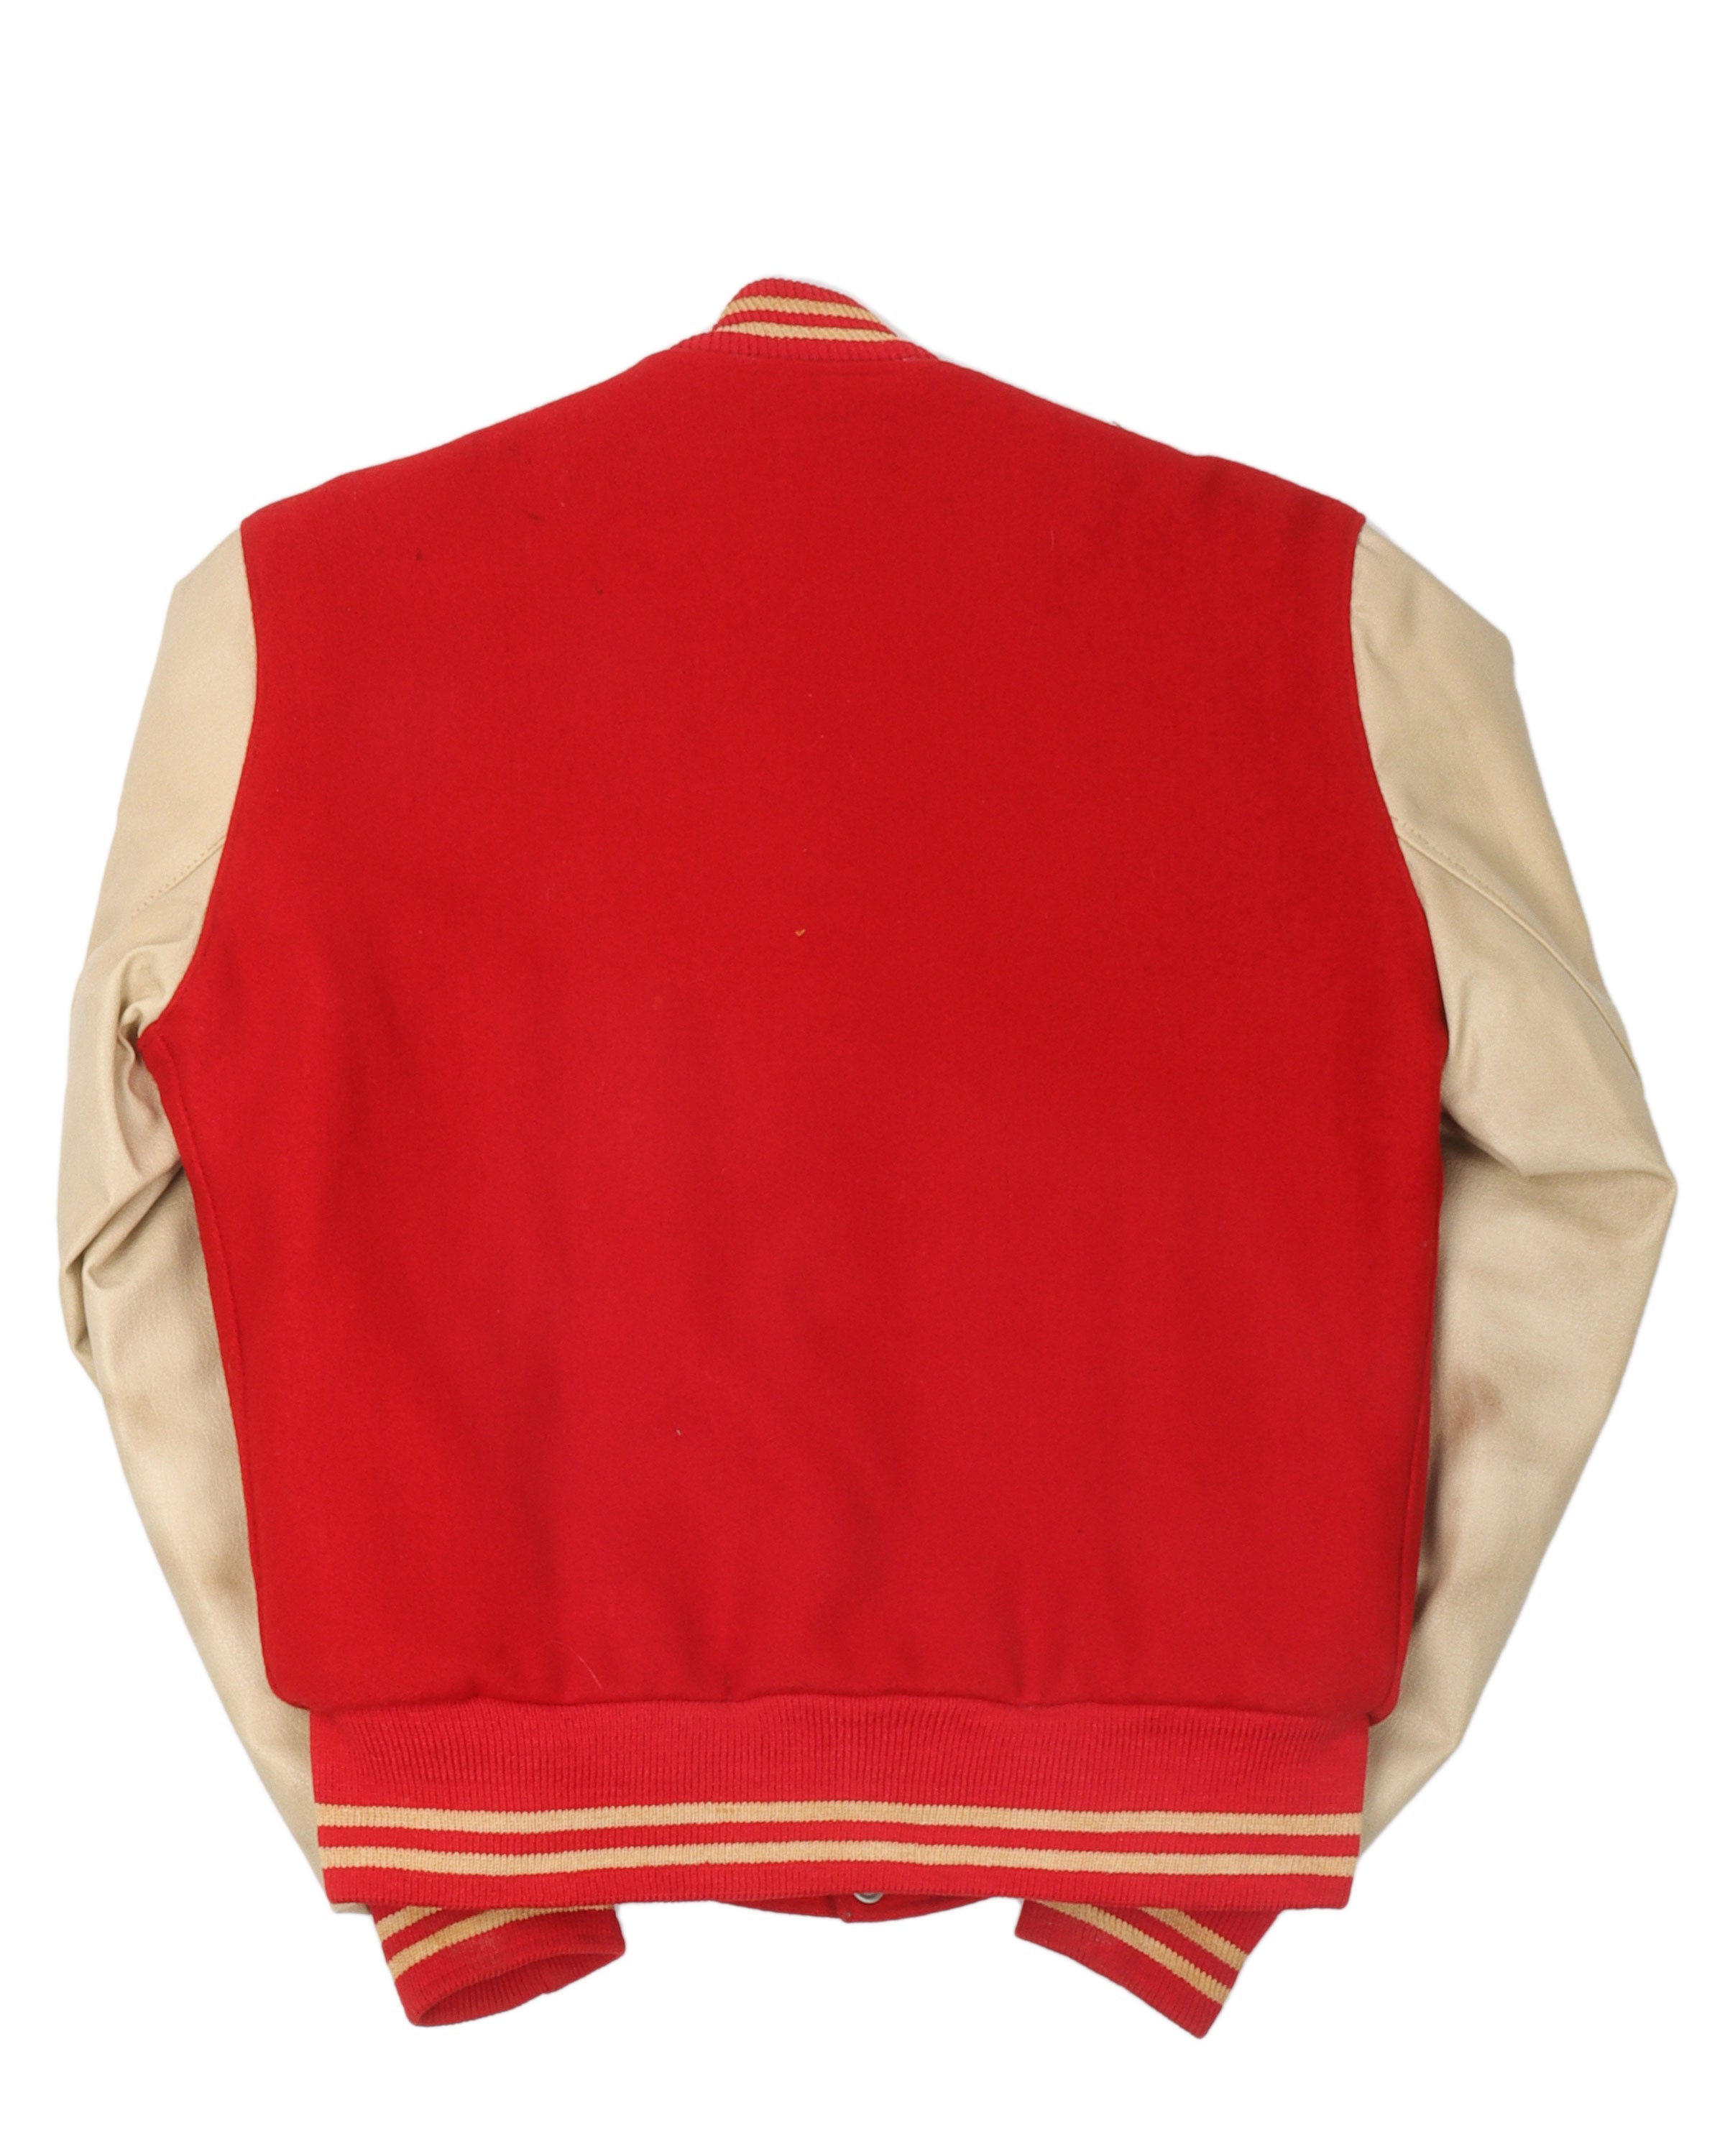 #73 Warm-Up Varsity Jacket